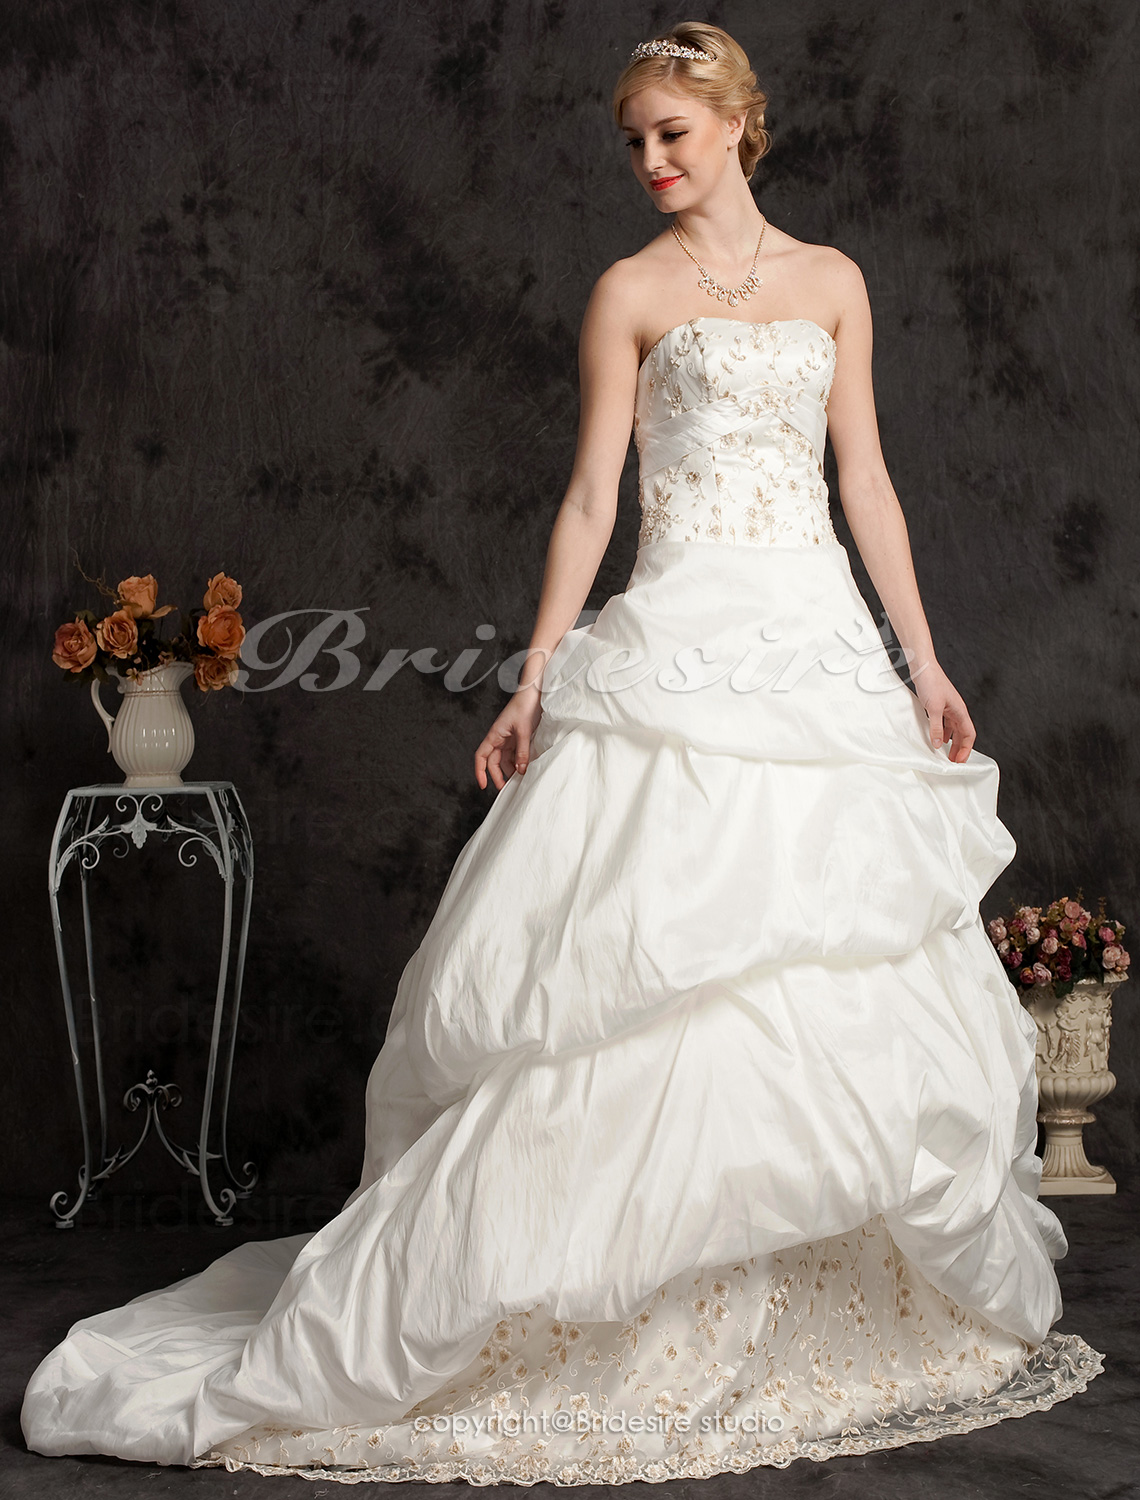 Ball Gown Taffeta Chapel Train Strapless Wedding Dress With Pick-ups